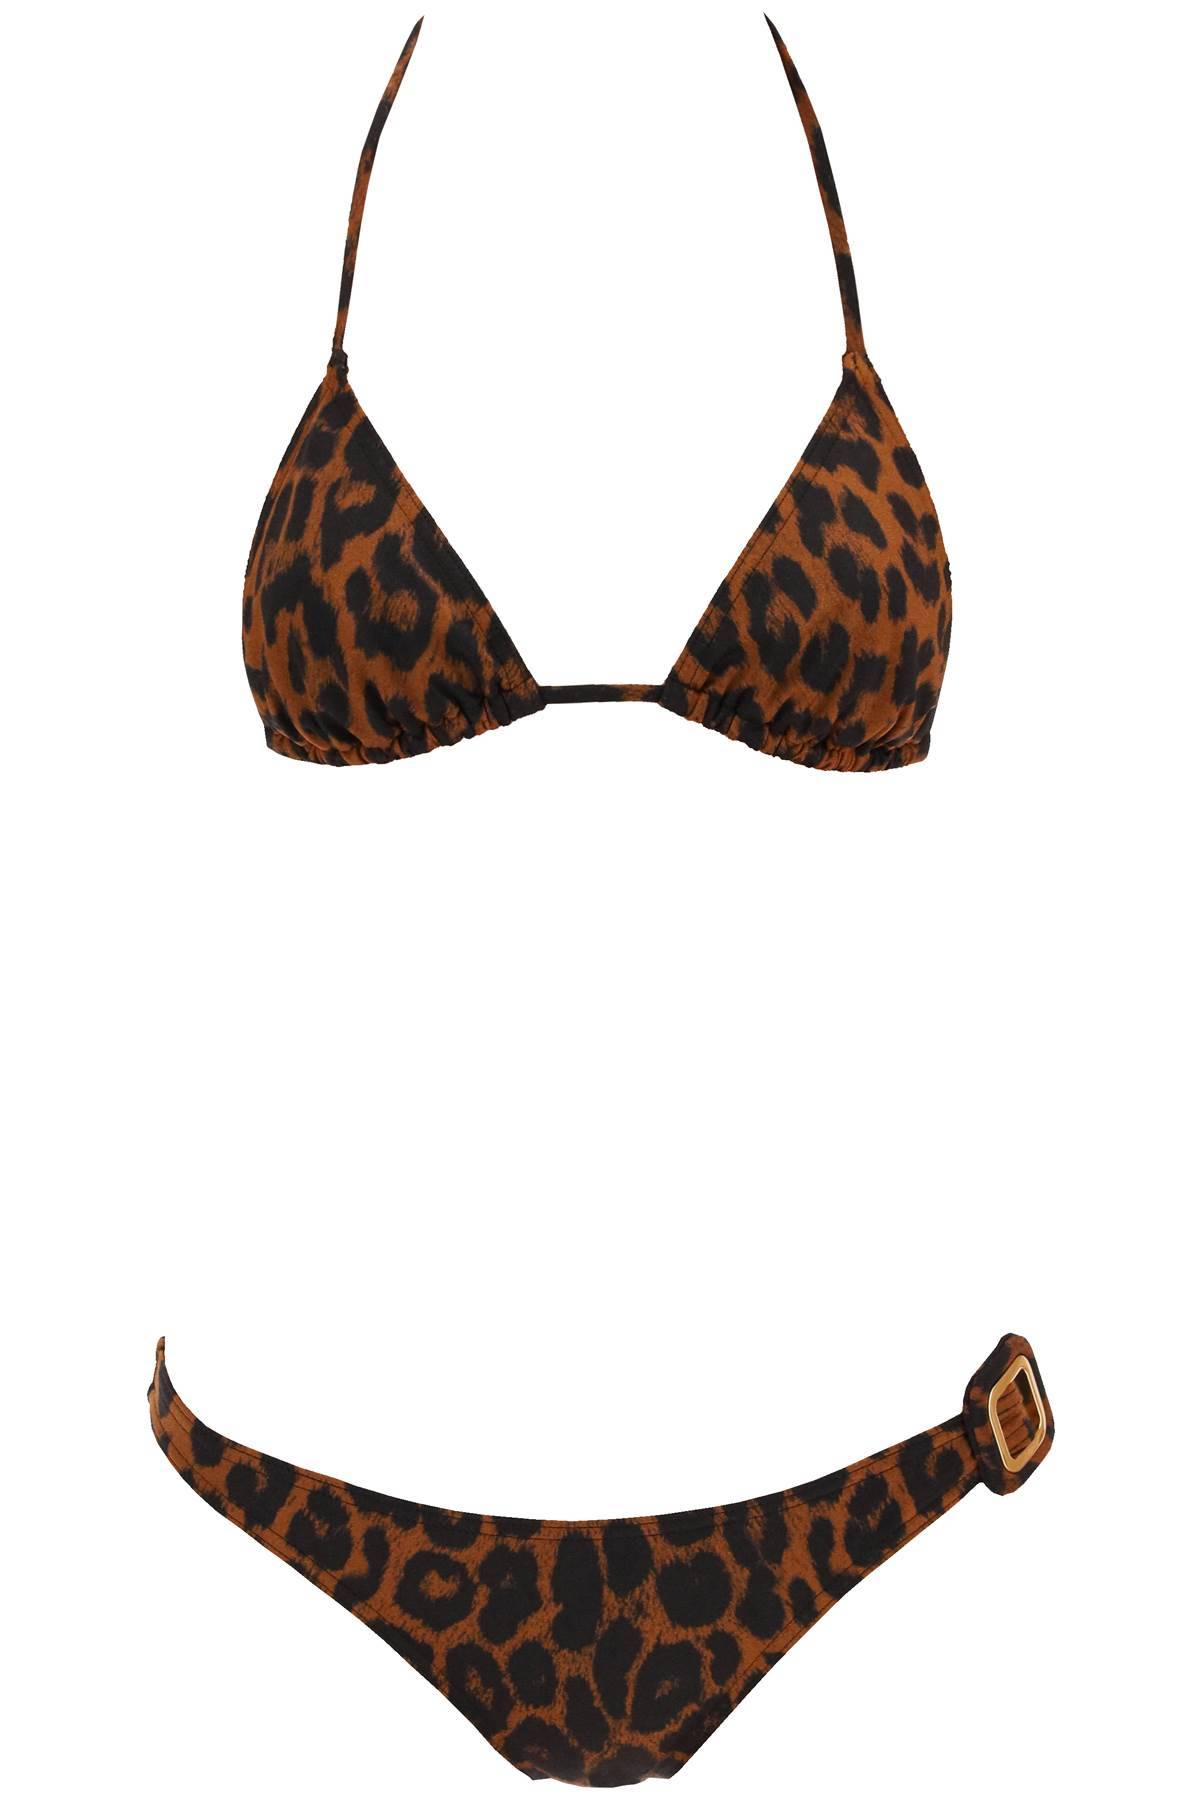 Tom Ford TOM FORD leopard print bikini set.